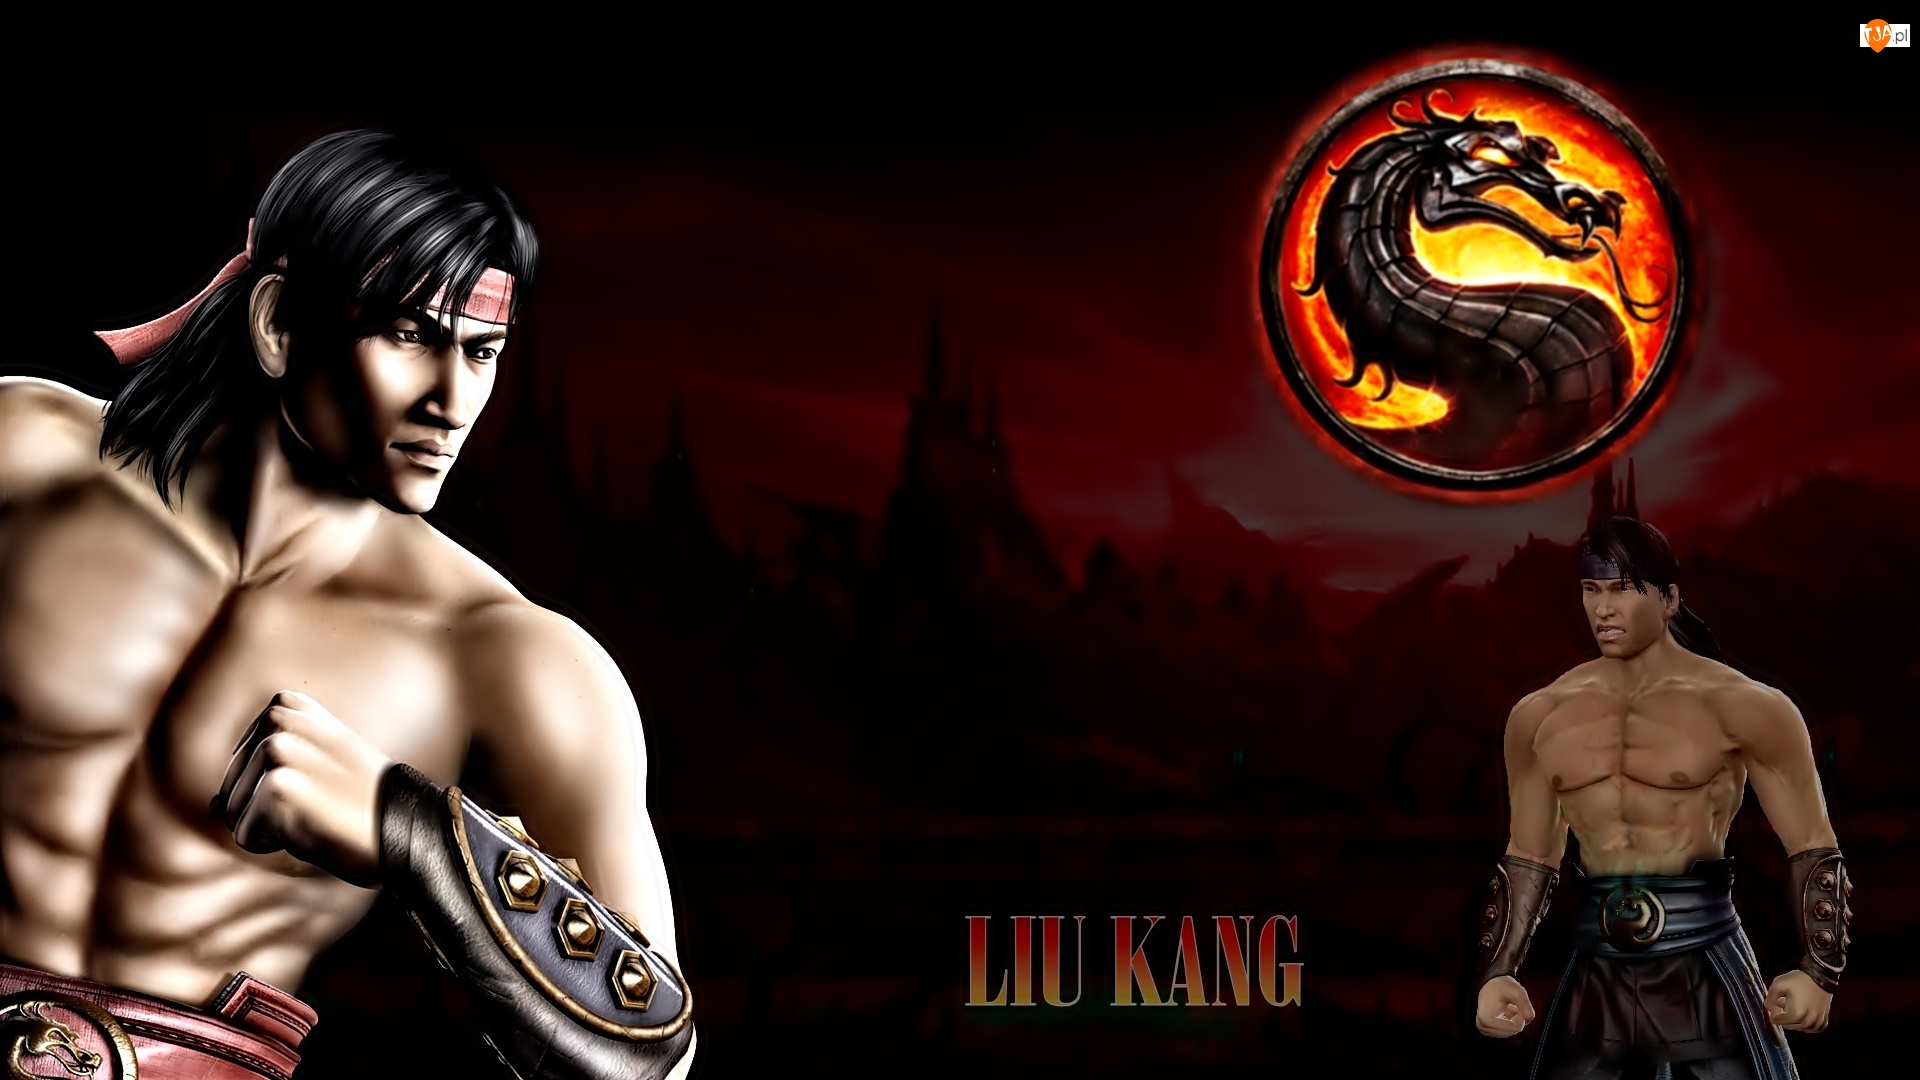 Liu Kang, Mortal Kombat